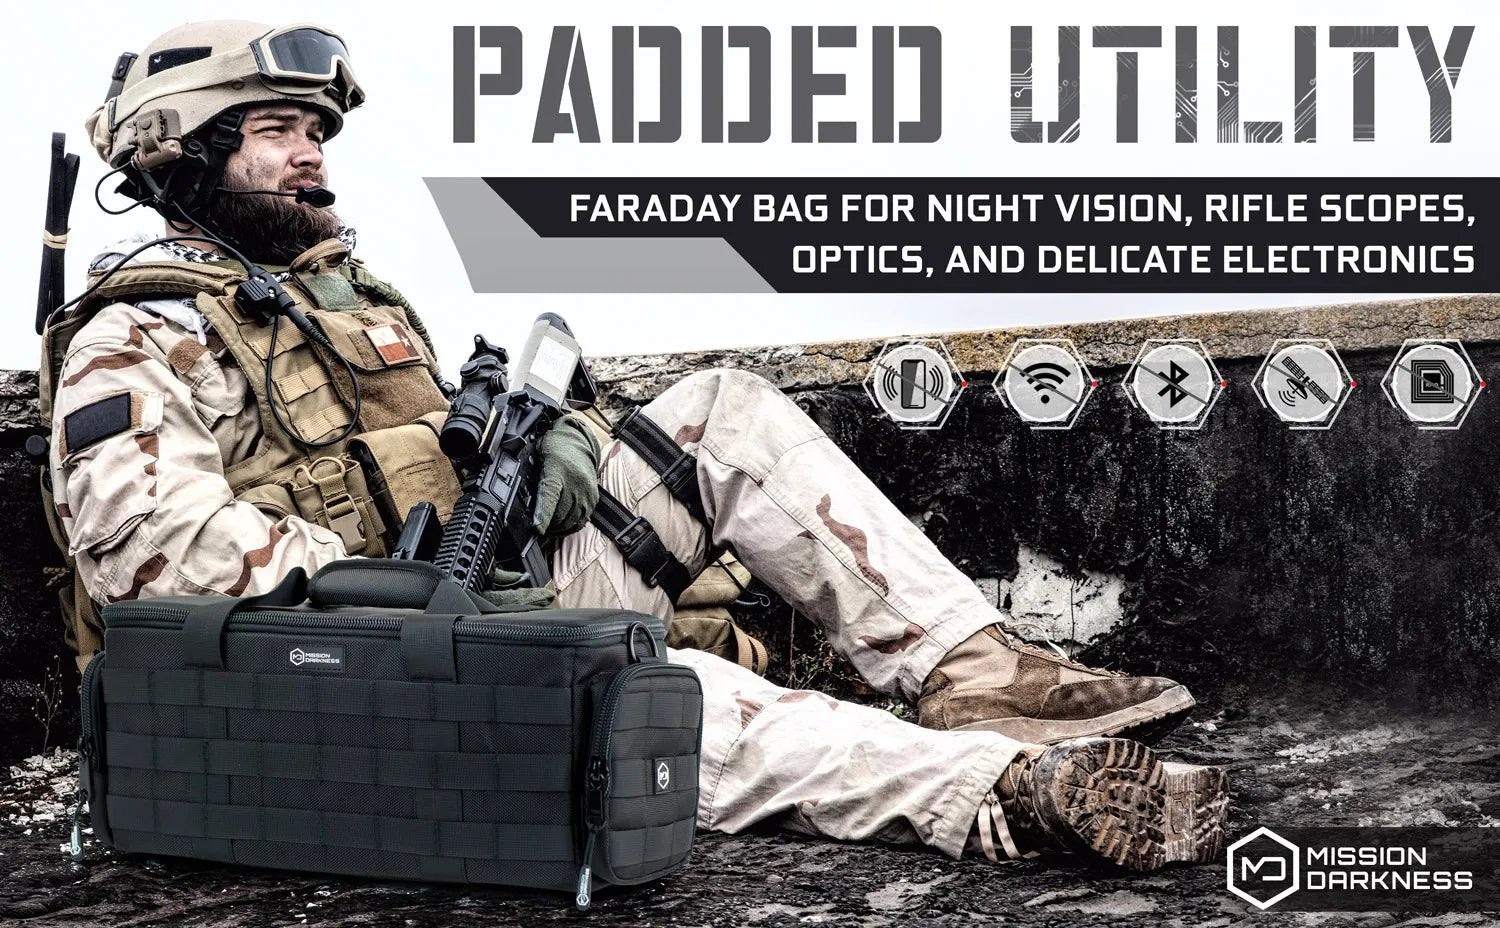 Mission Darkness Protected Traveler Faraday Bag Bundle